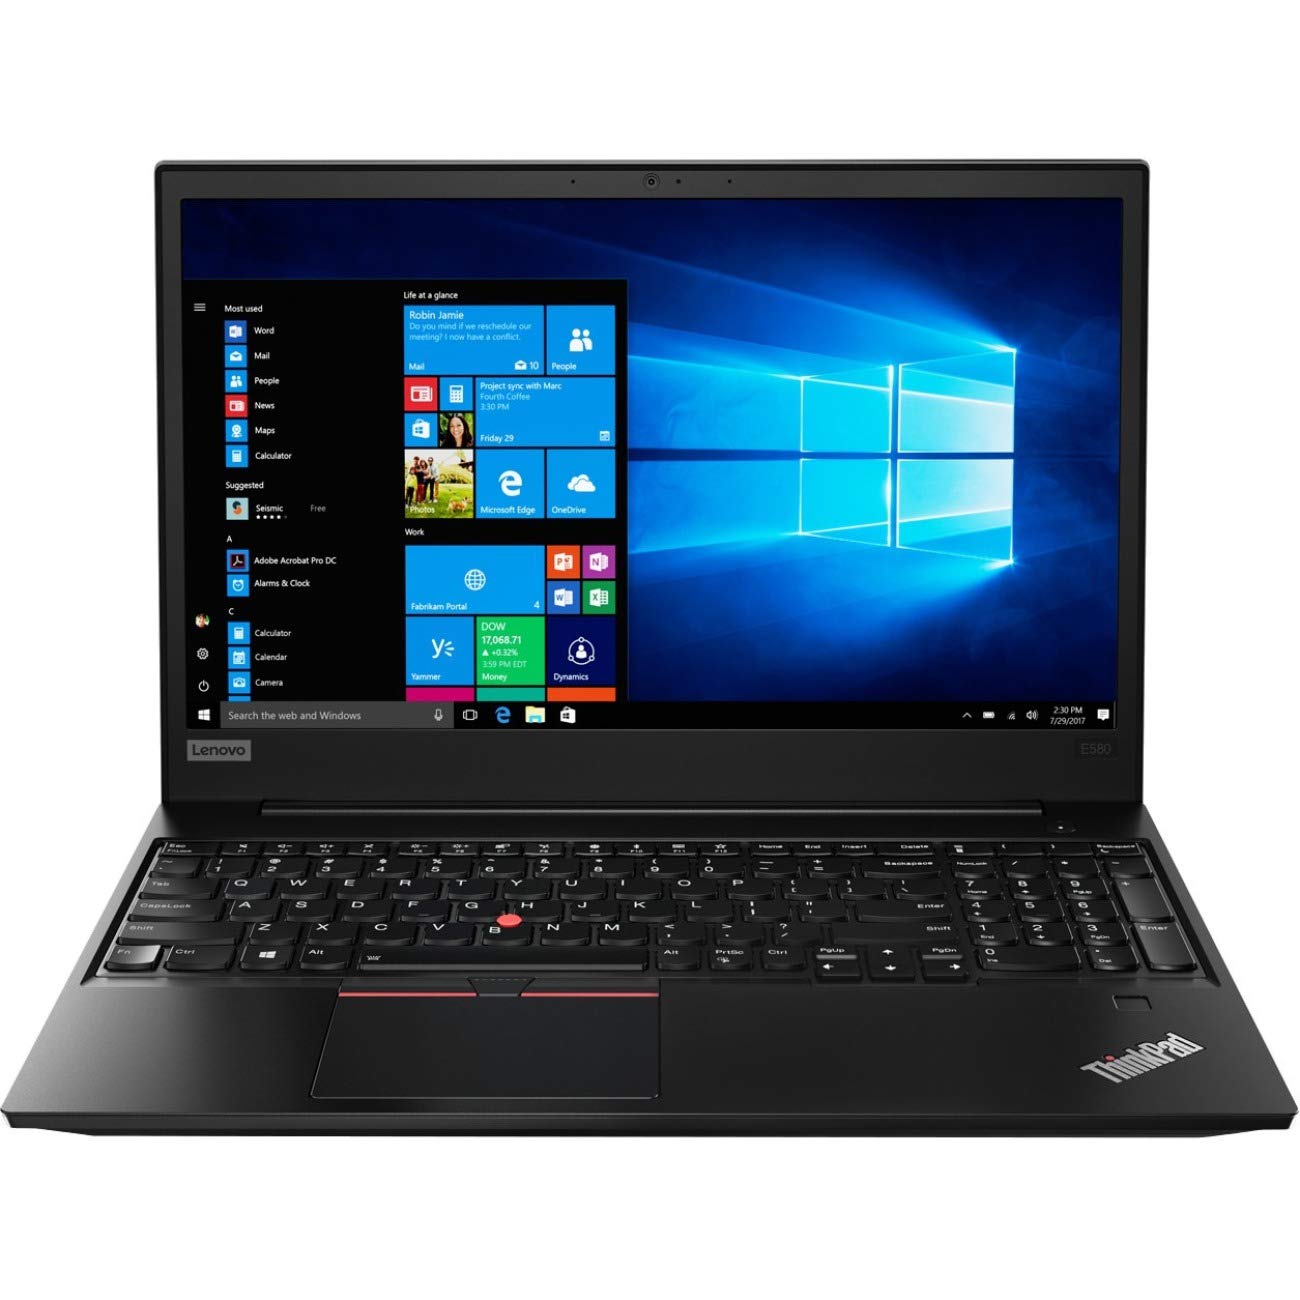 Lenovo - ThinkPad E580 15.6" Laptop - Intel Core i3 - 4GB Memory - 500GB Hard Drive - Black